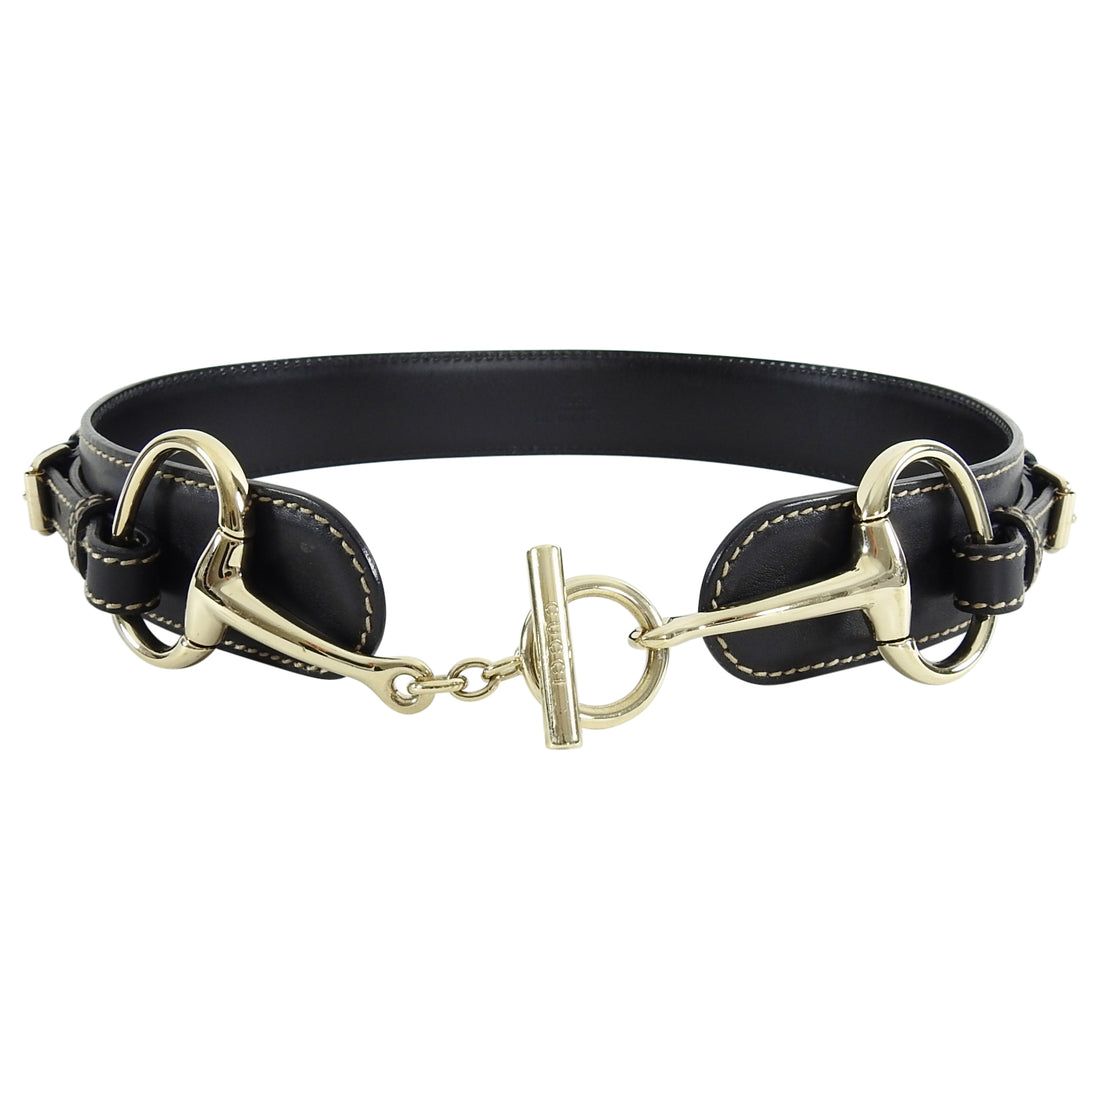 Gucci Black Leather and Gold Horsebit Waist Cincher Belt – I MISS